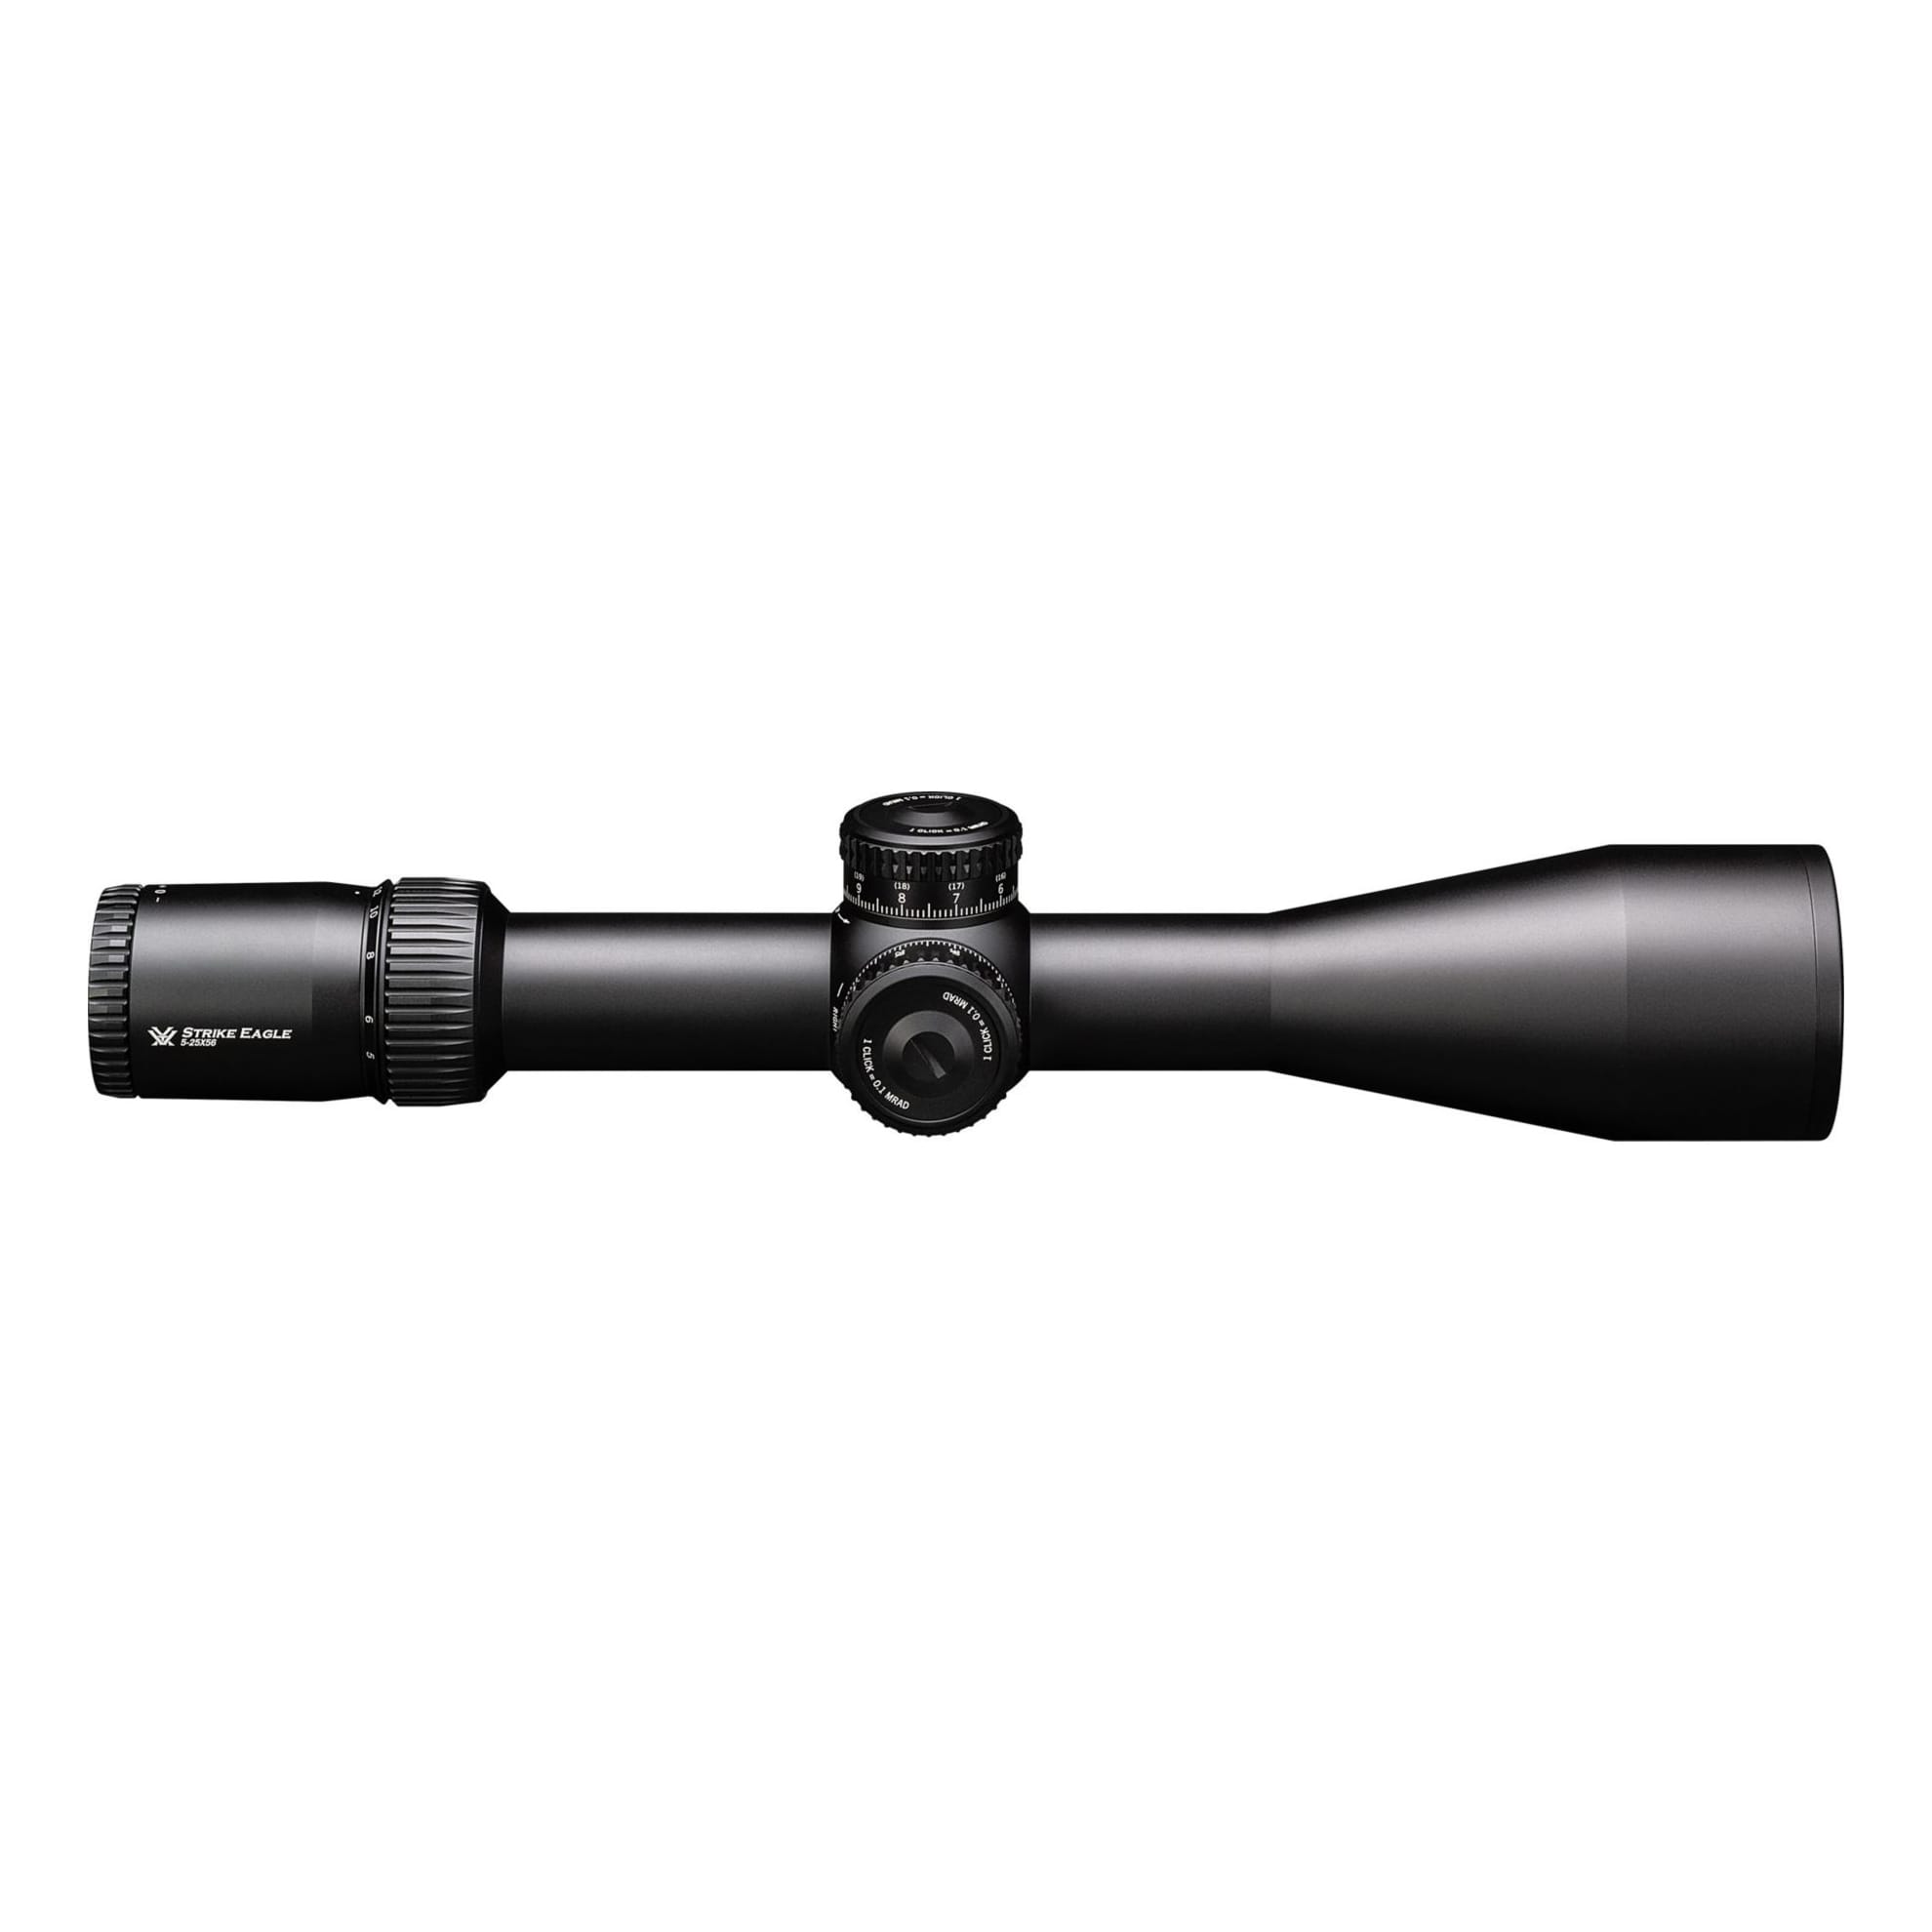 Vortex® Strike Eagle® Riflescopes